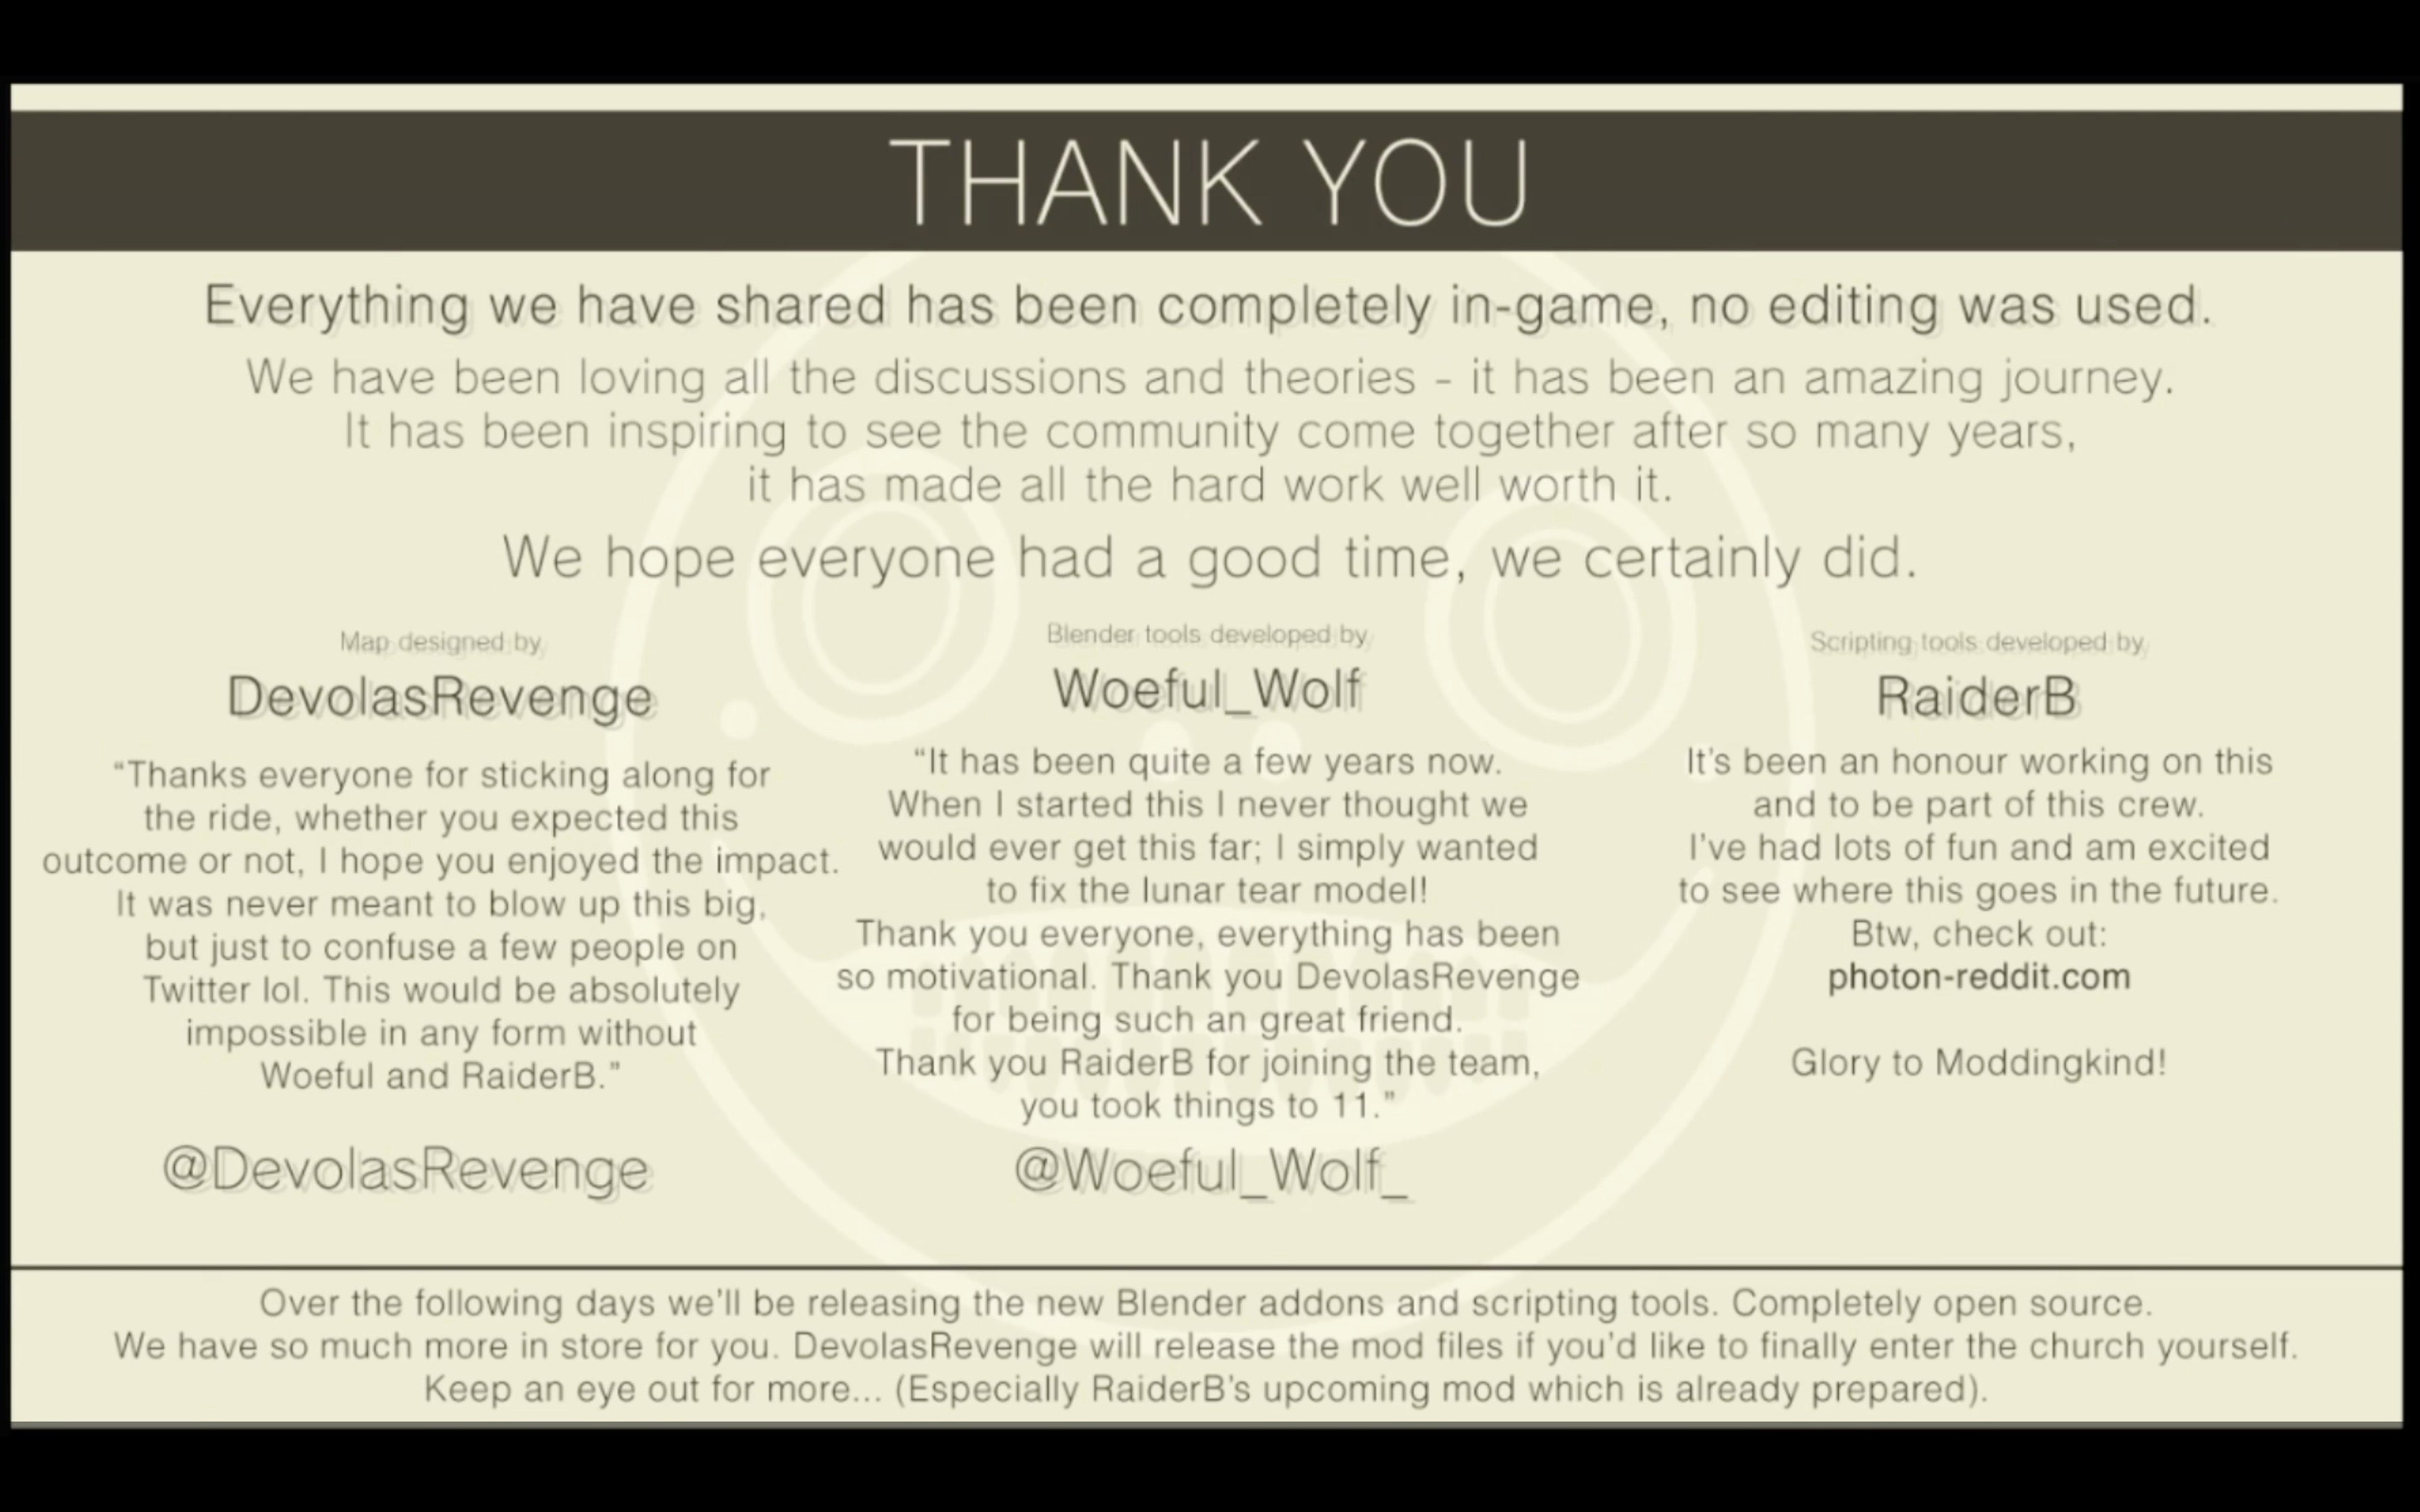 The team's statement. (Image: DevolasRevenge / Woeful_Wolf_ / RaiderB)